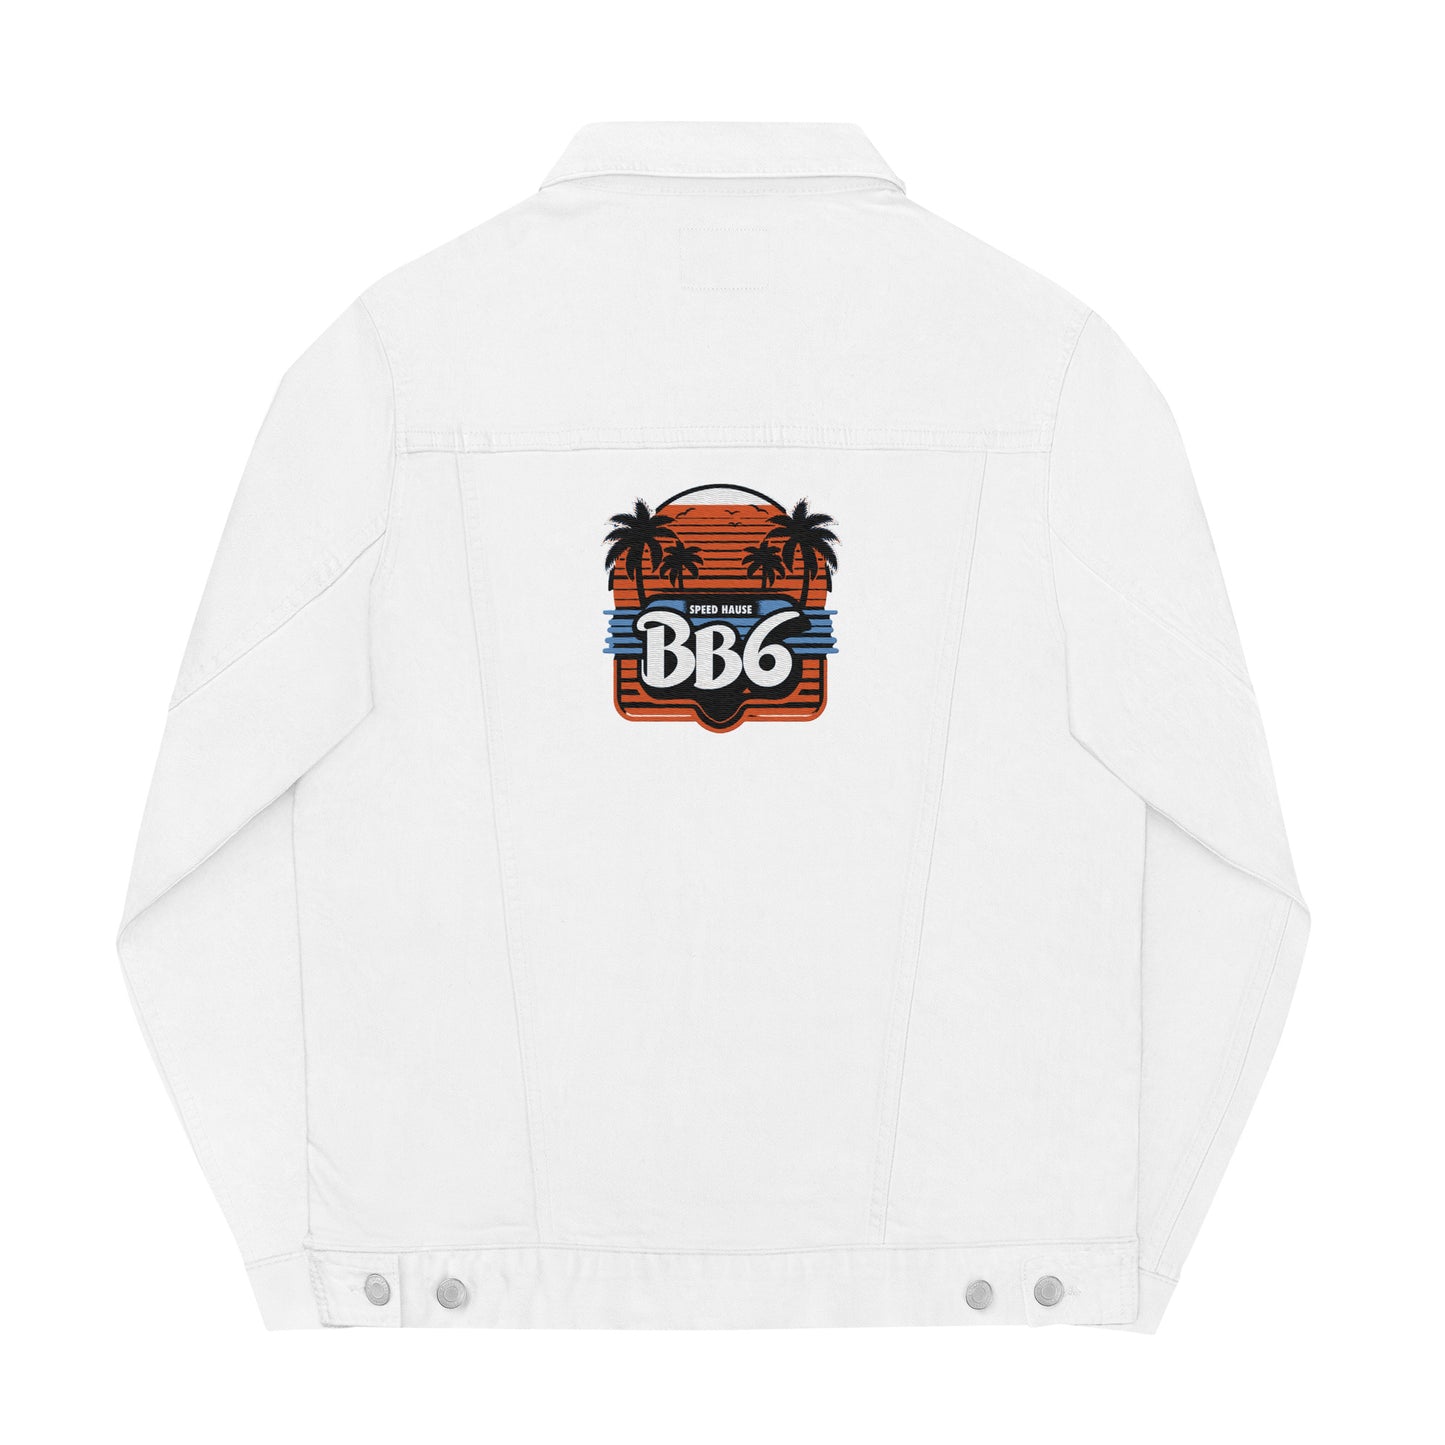 BB6 Premium denim jacket